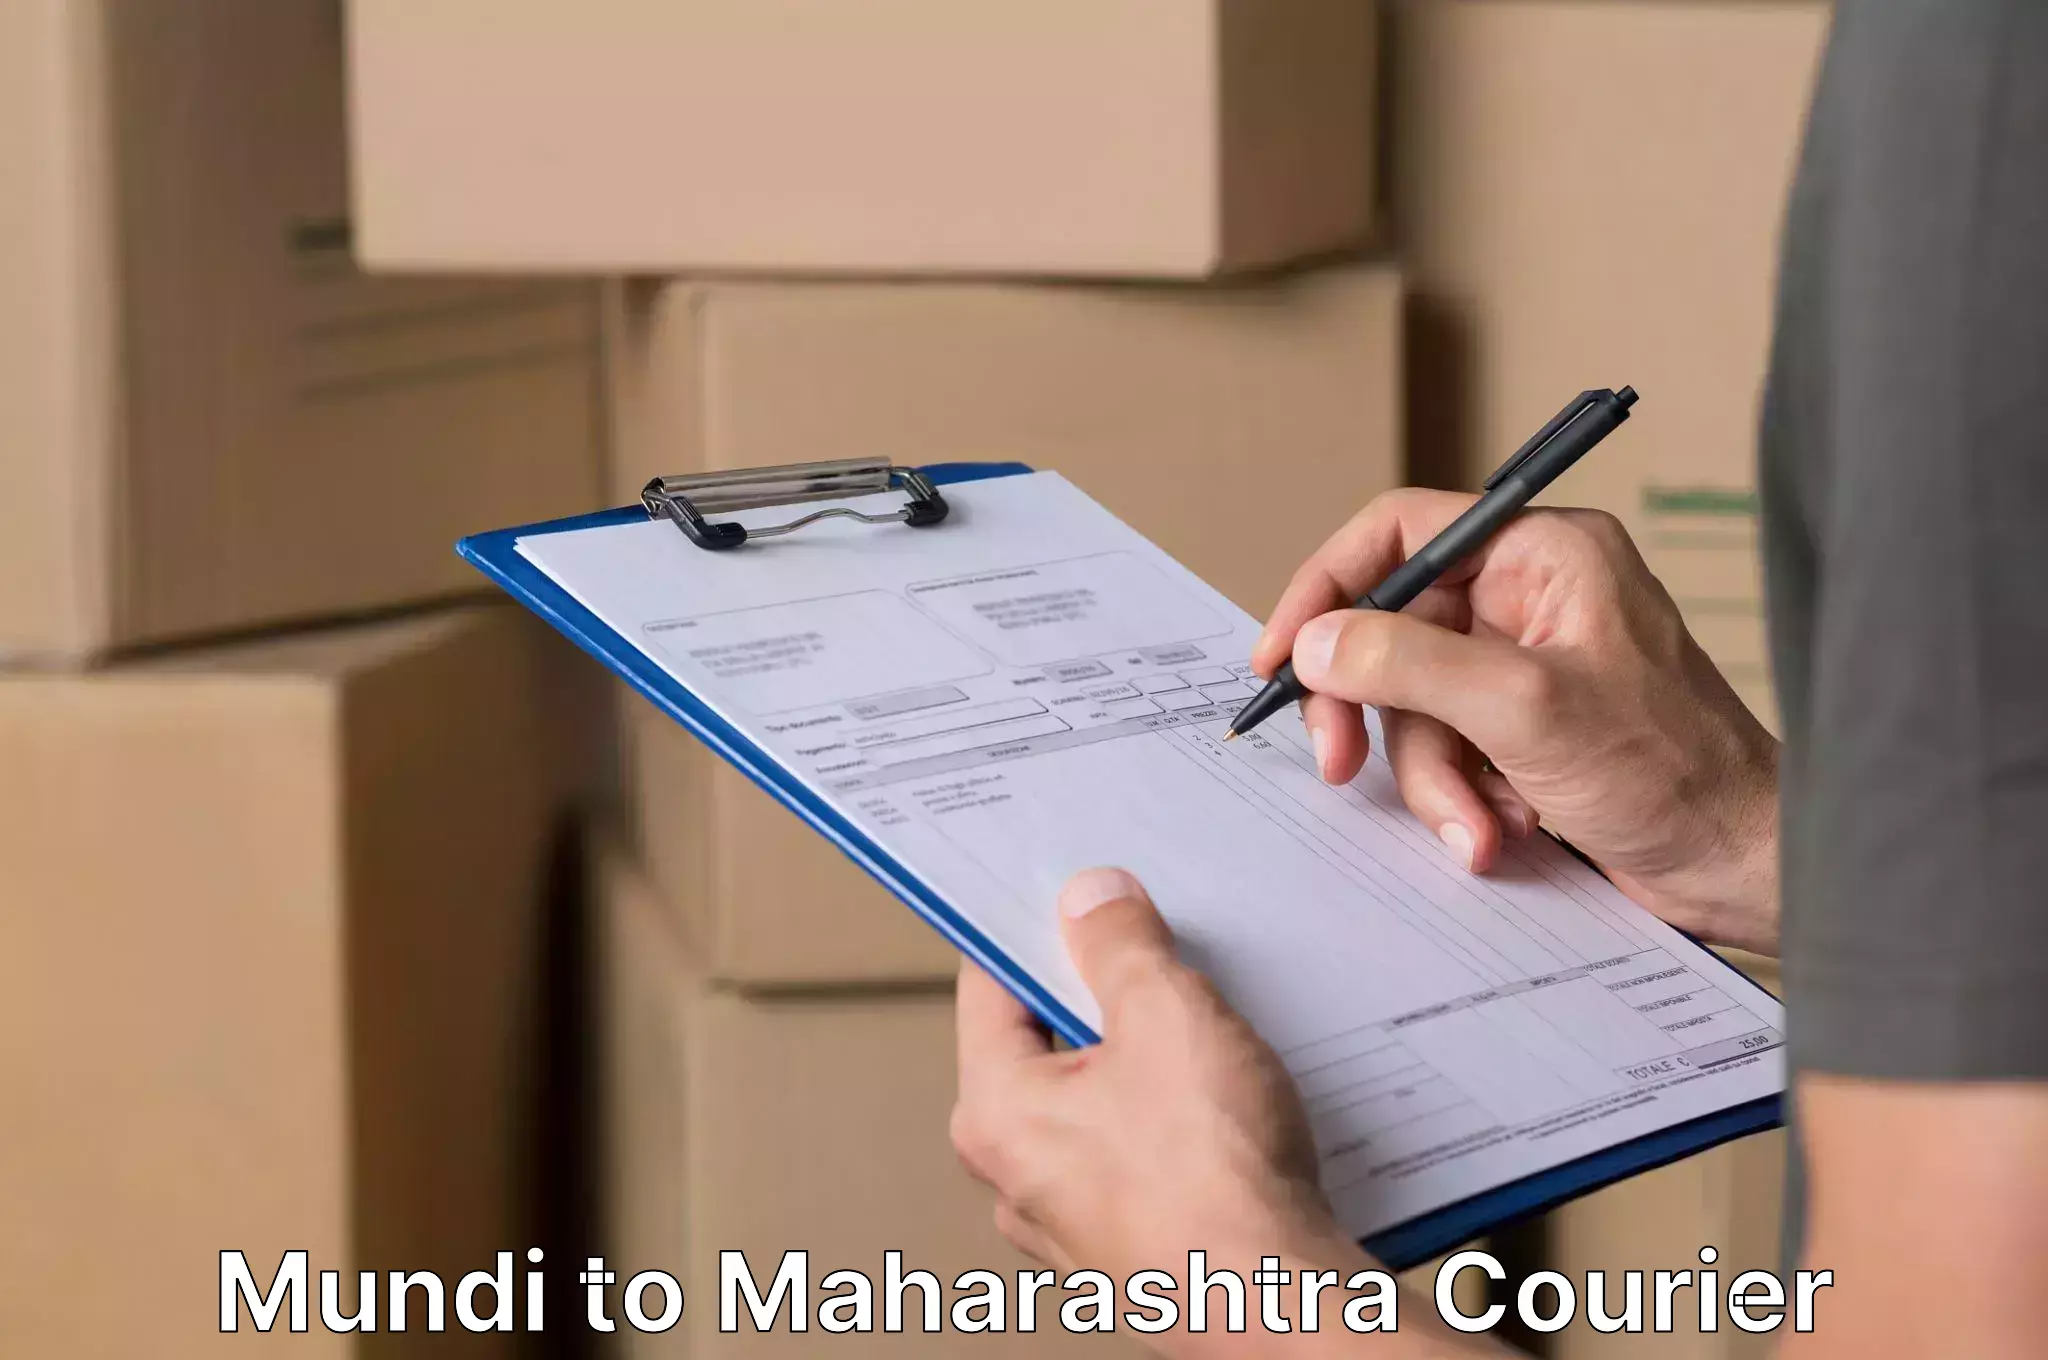 Efficient moving company Mundi to Maharashtra